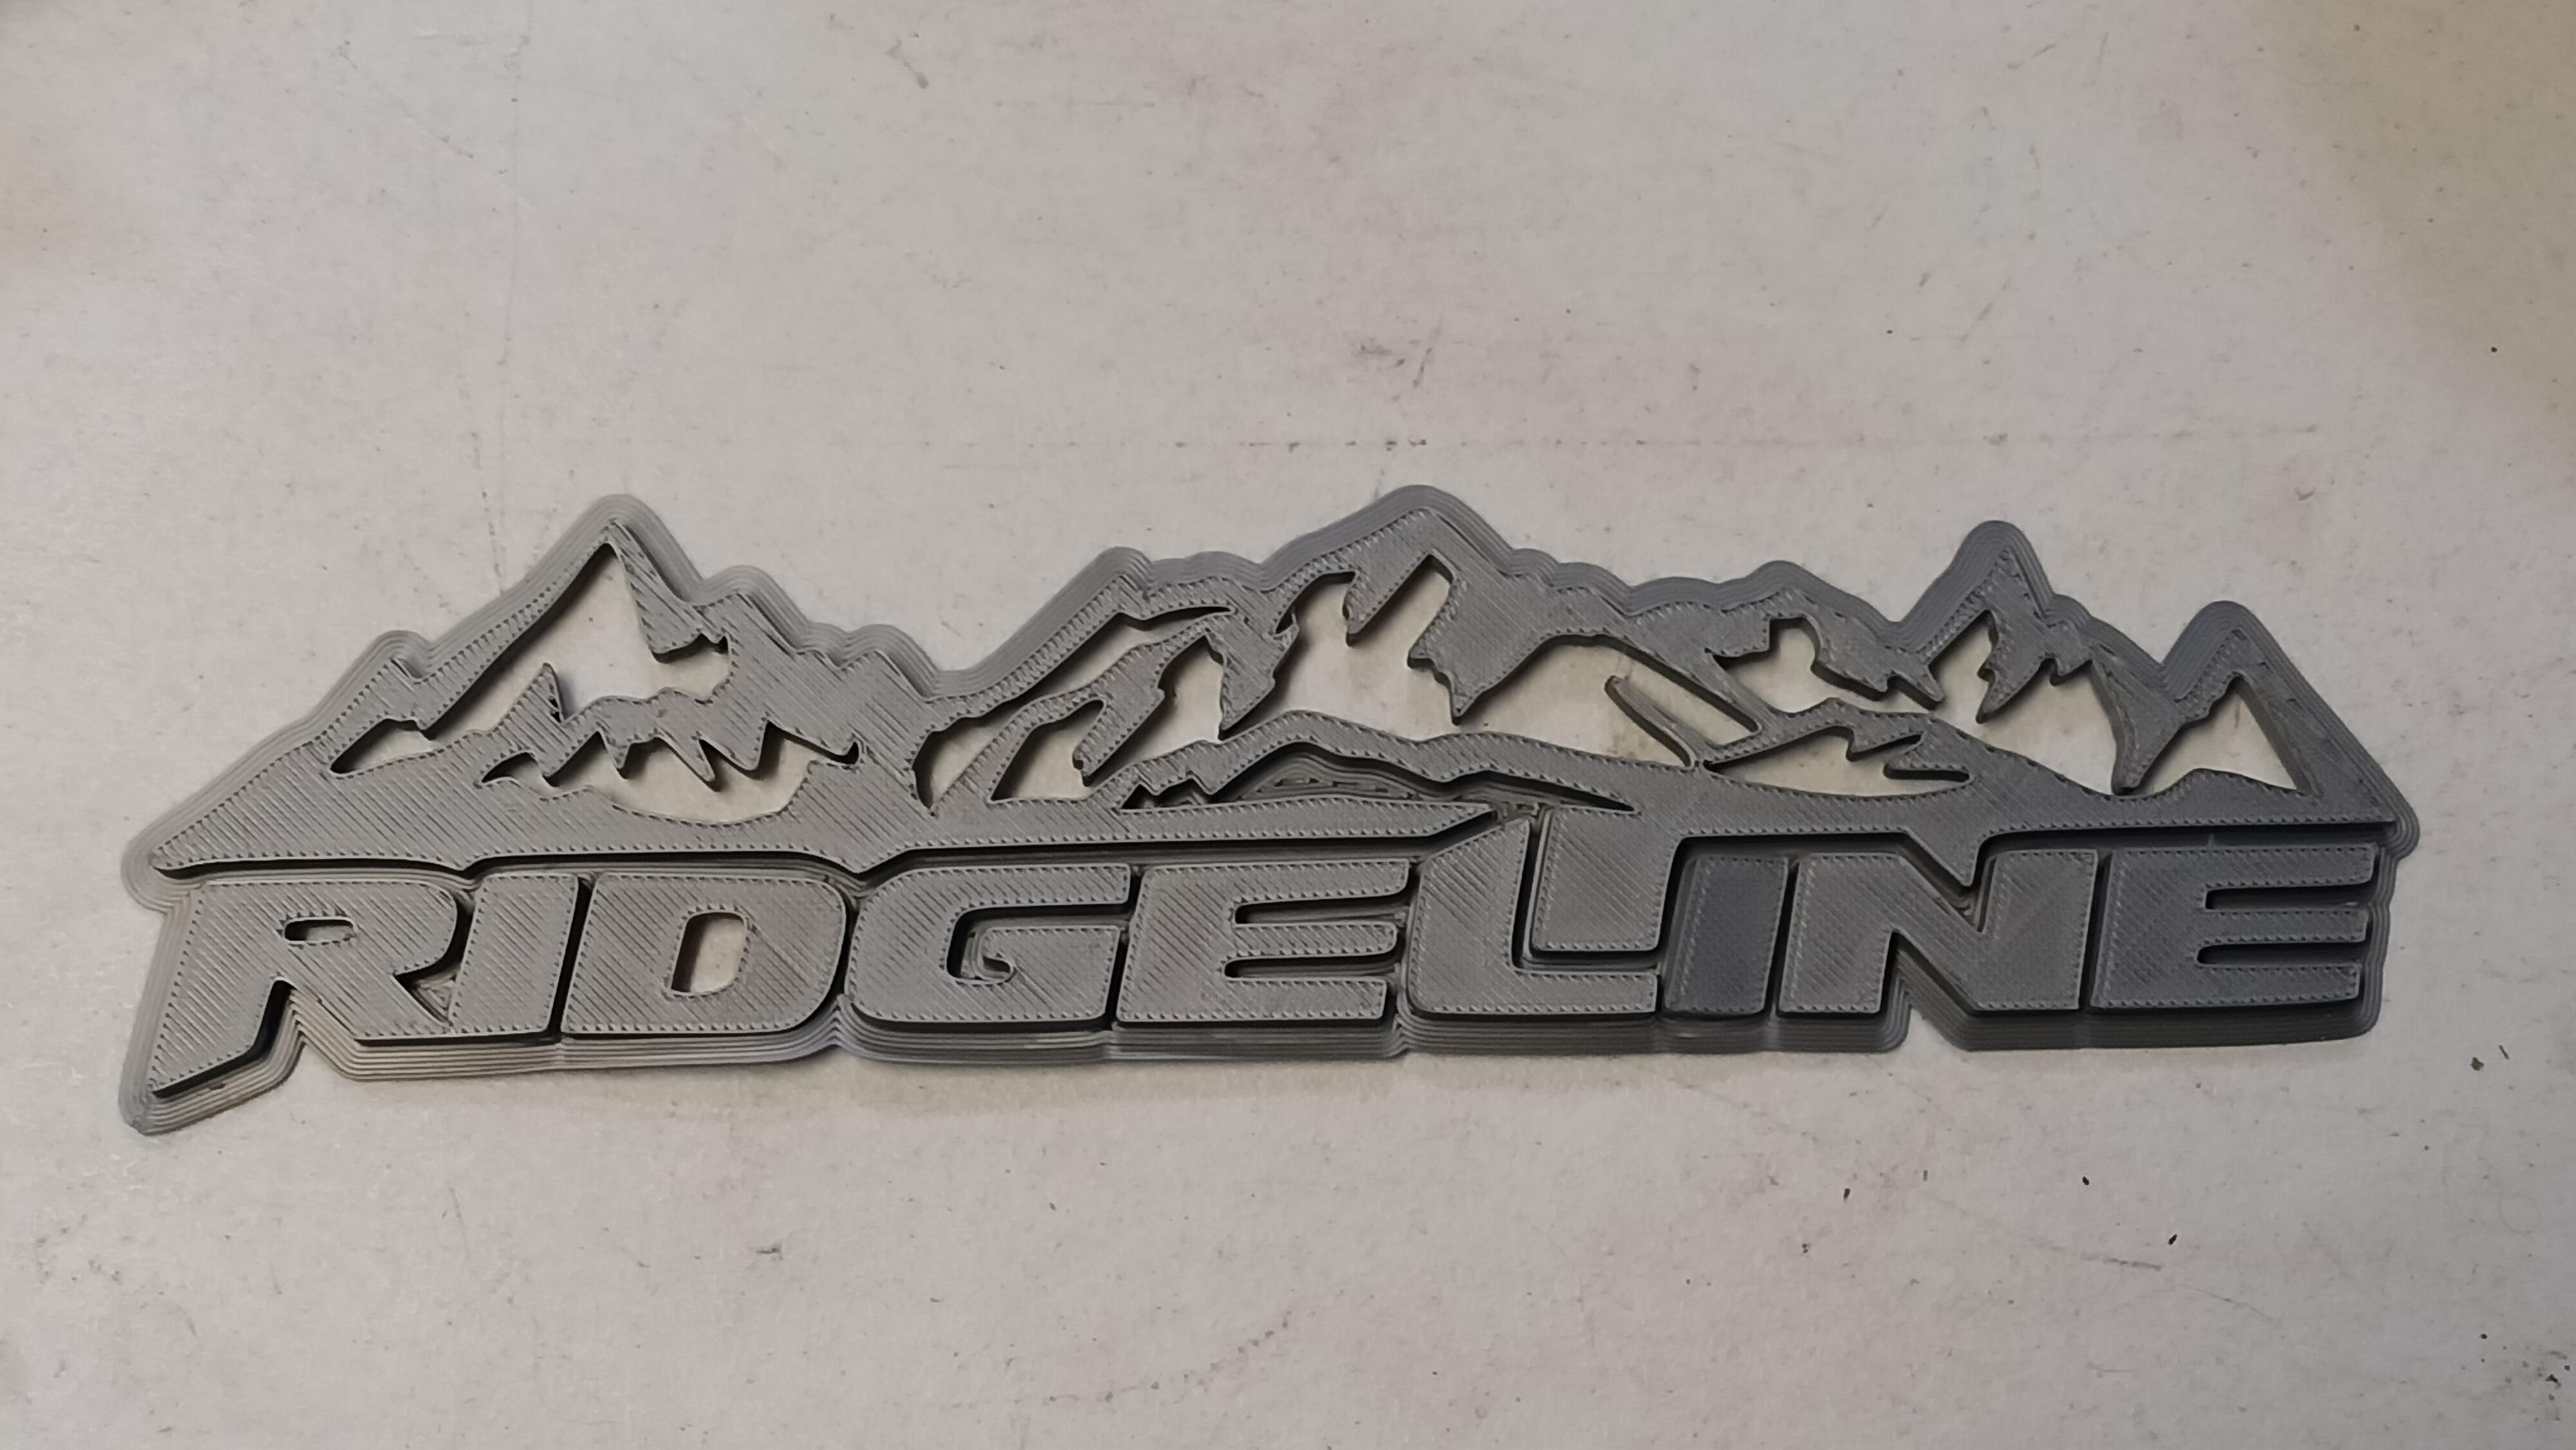 Ridgeline Badge with mountain peaks above emblem 3d model